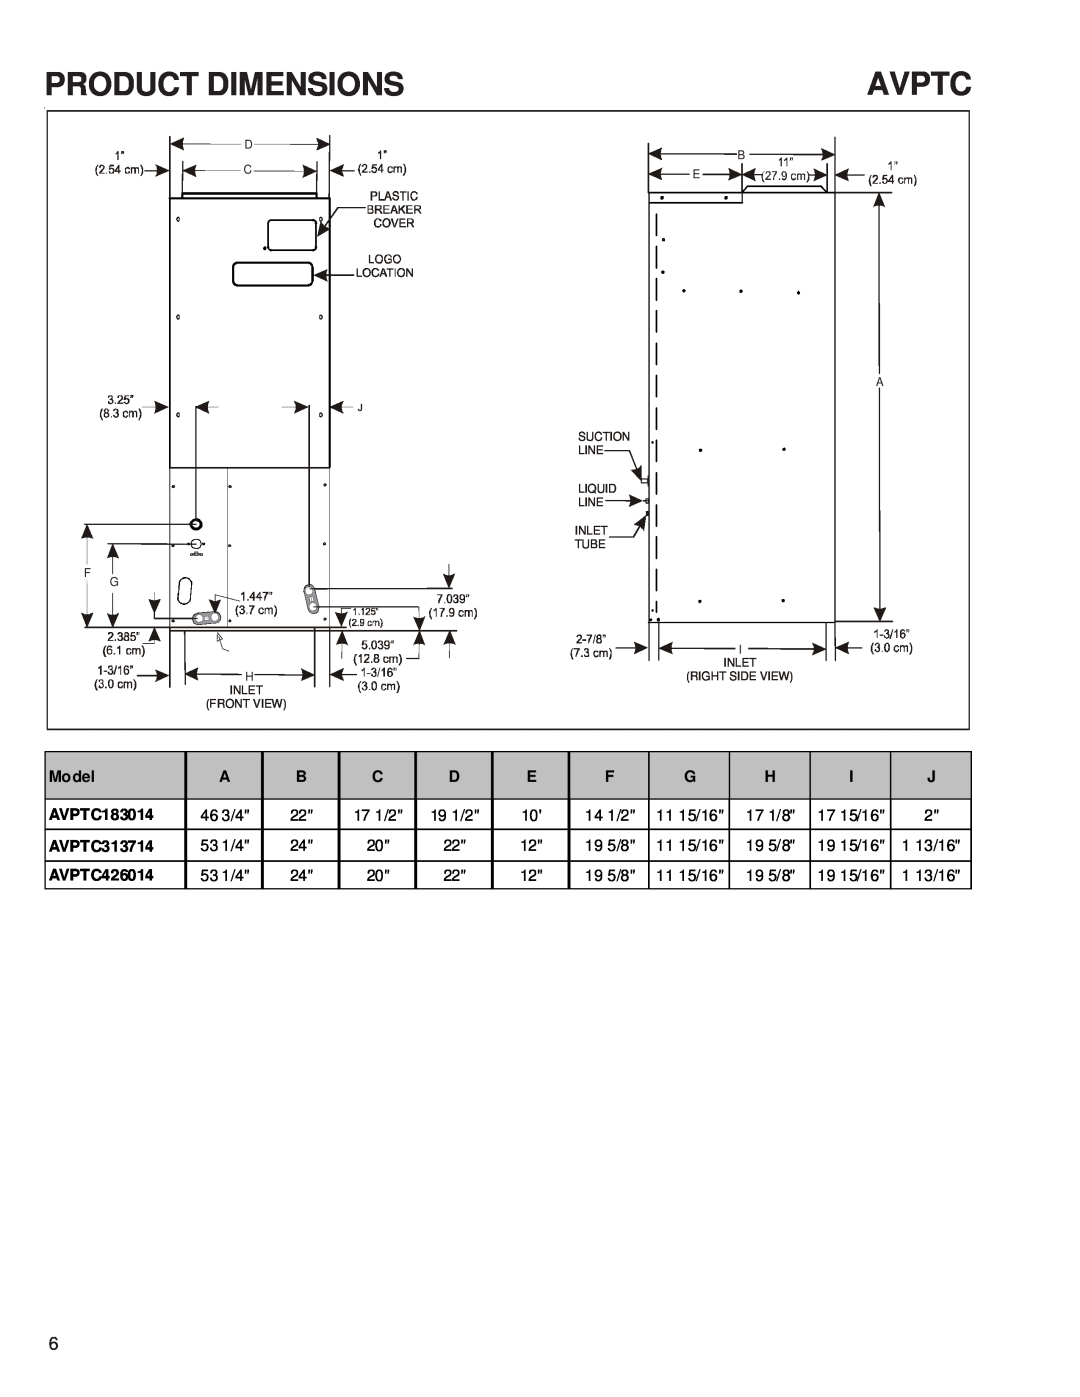 Goodman Mfg AVPTC183014, AVPTC313714 service manual Product Dimensions, Avptc 